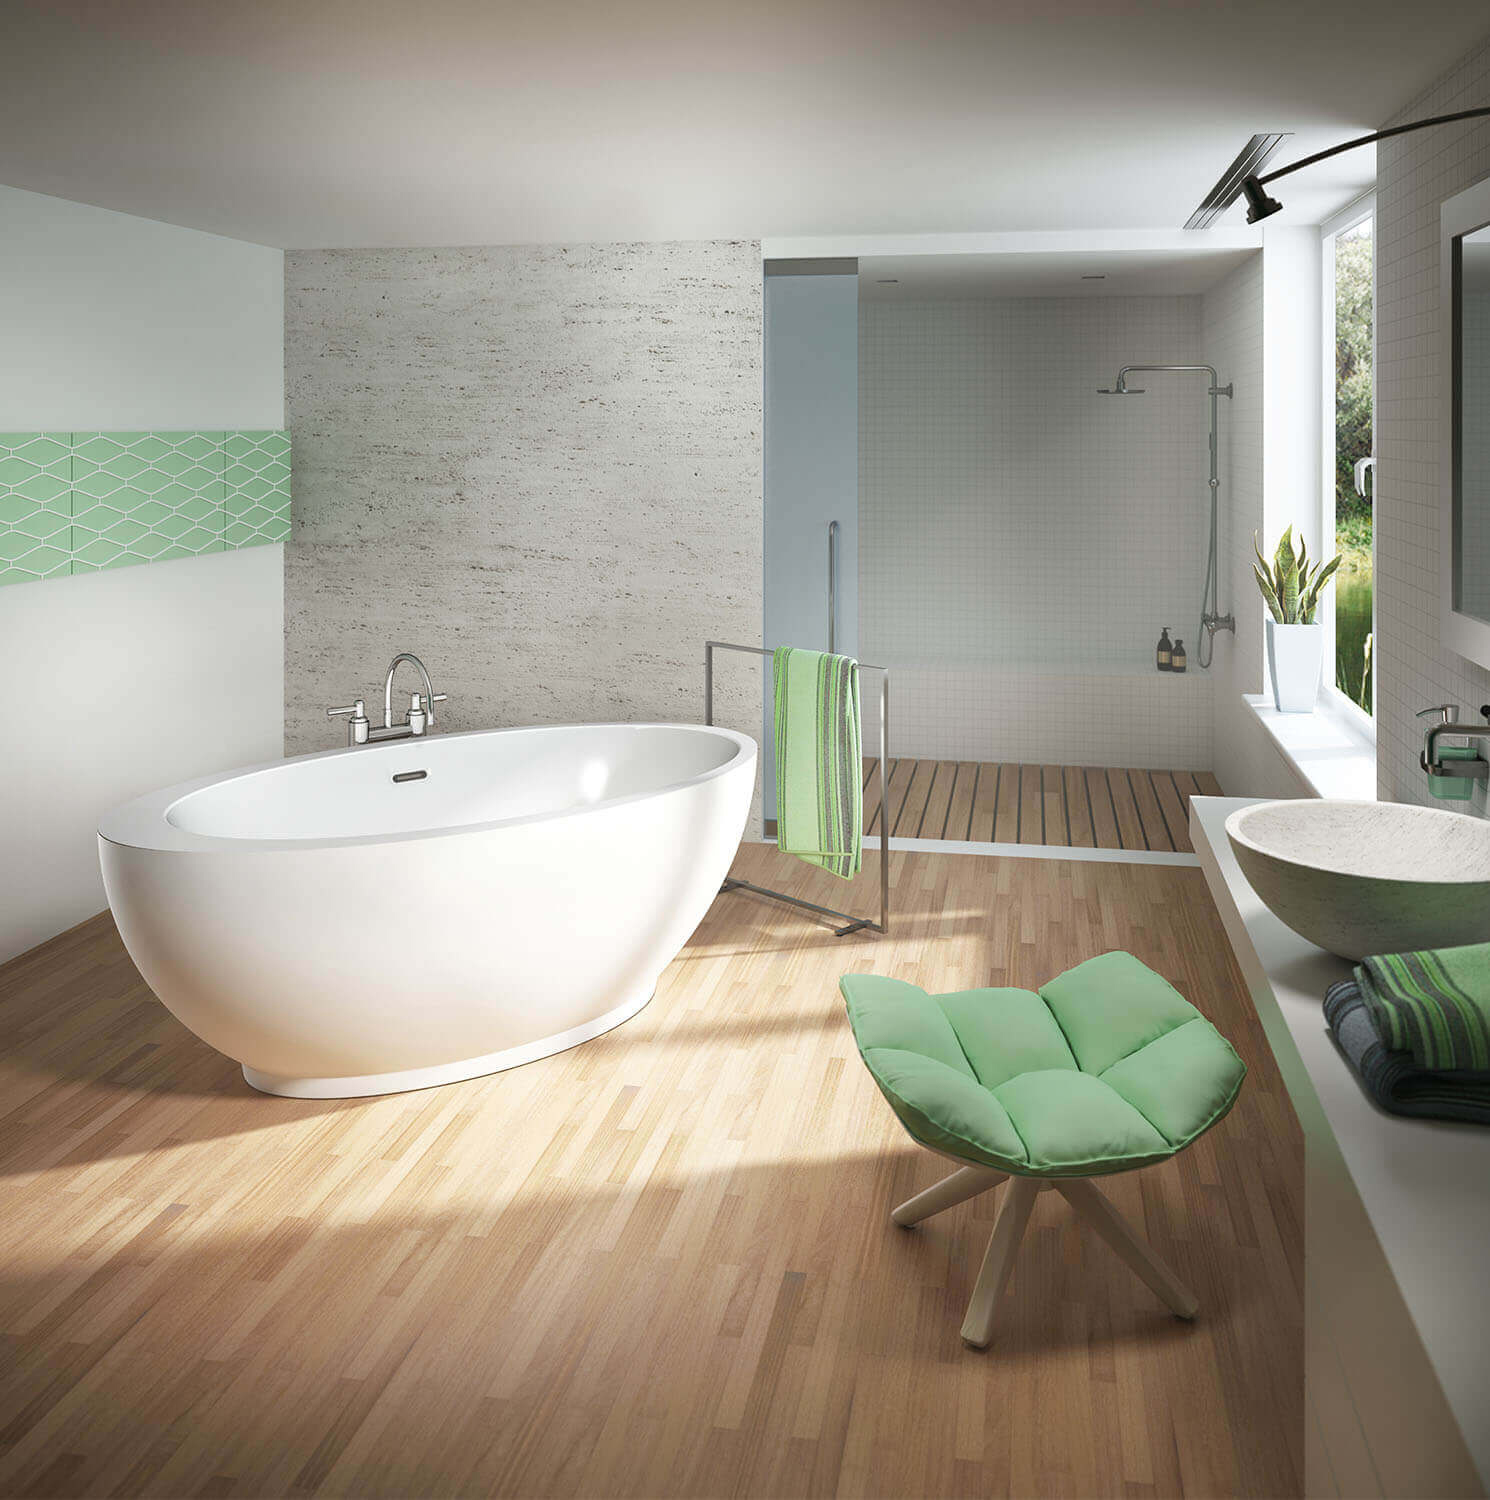 OPALIA 6839 Off Centered Ellipse Right air jet bathtub for your modern bathroom